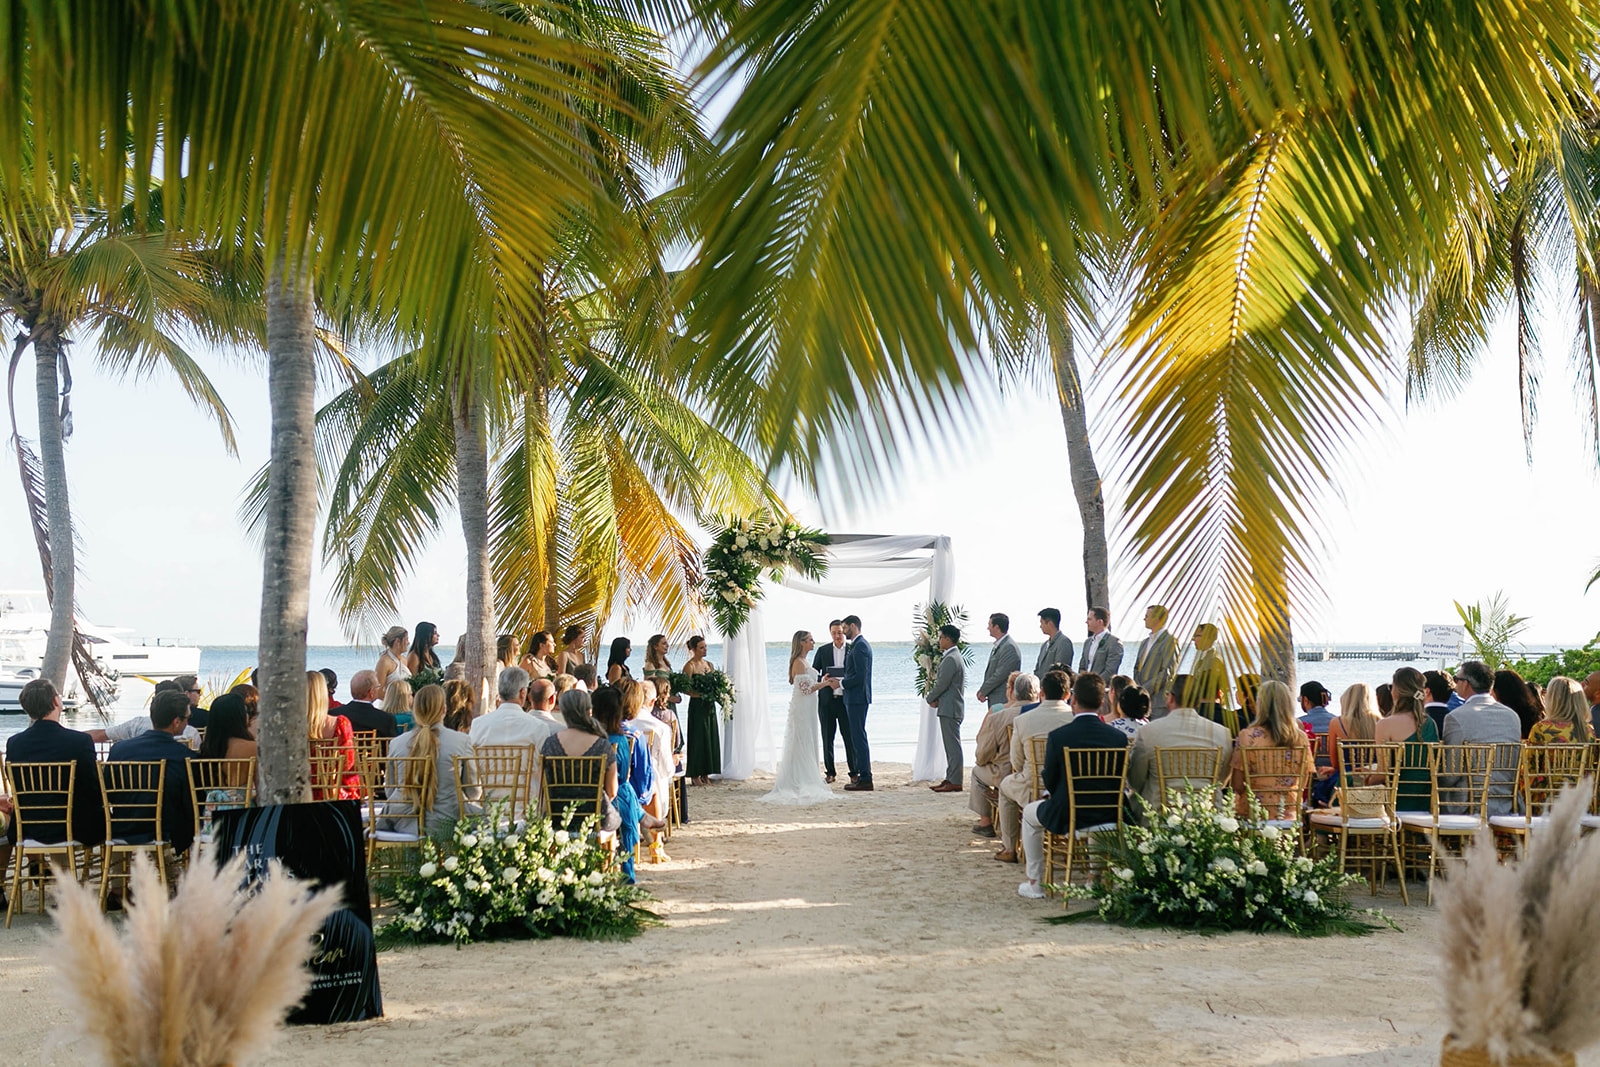 Grand Caymans Kaibo beach wedding